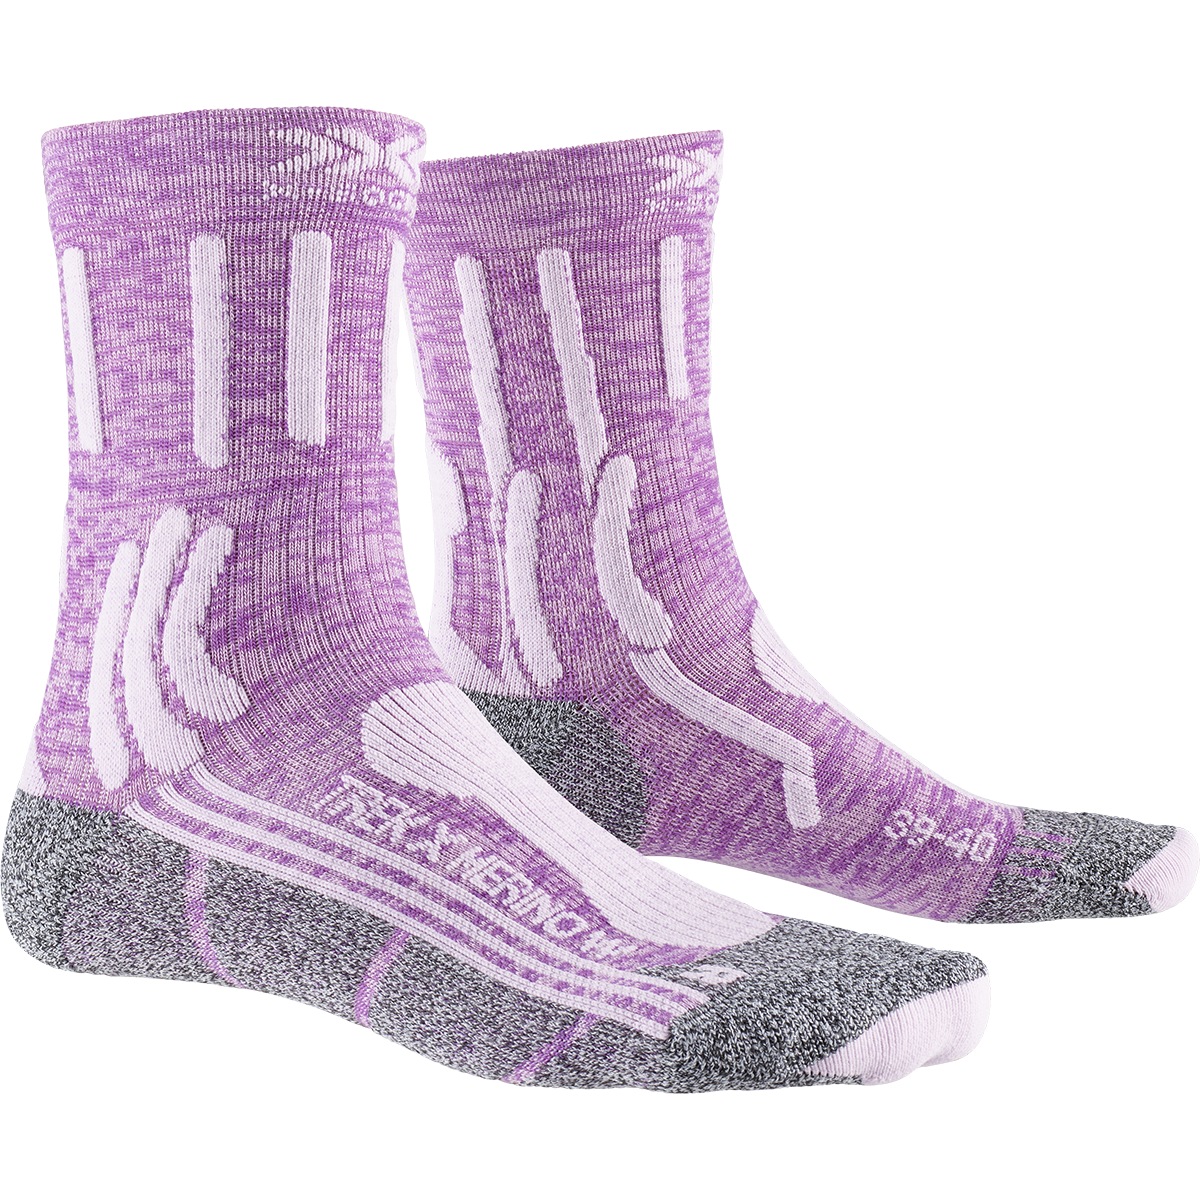 Productfoto van X-Socks Trek X Merino Sokken Dames - magnolia purple melange/dolomite grey